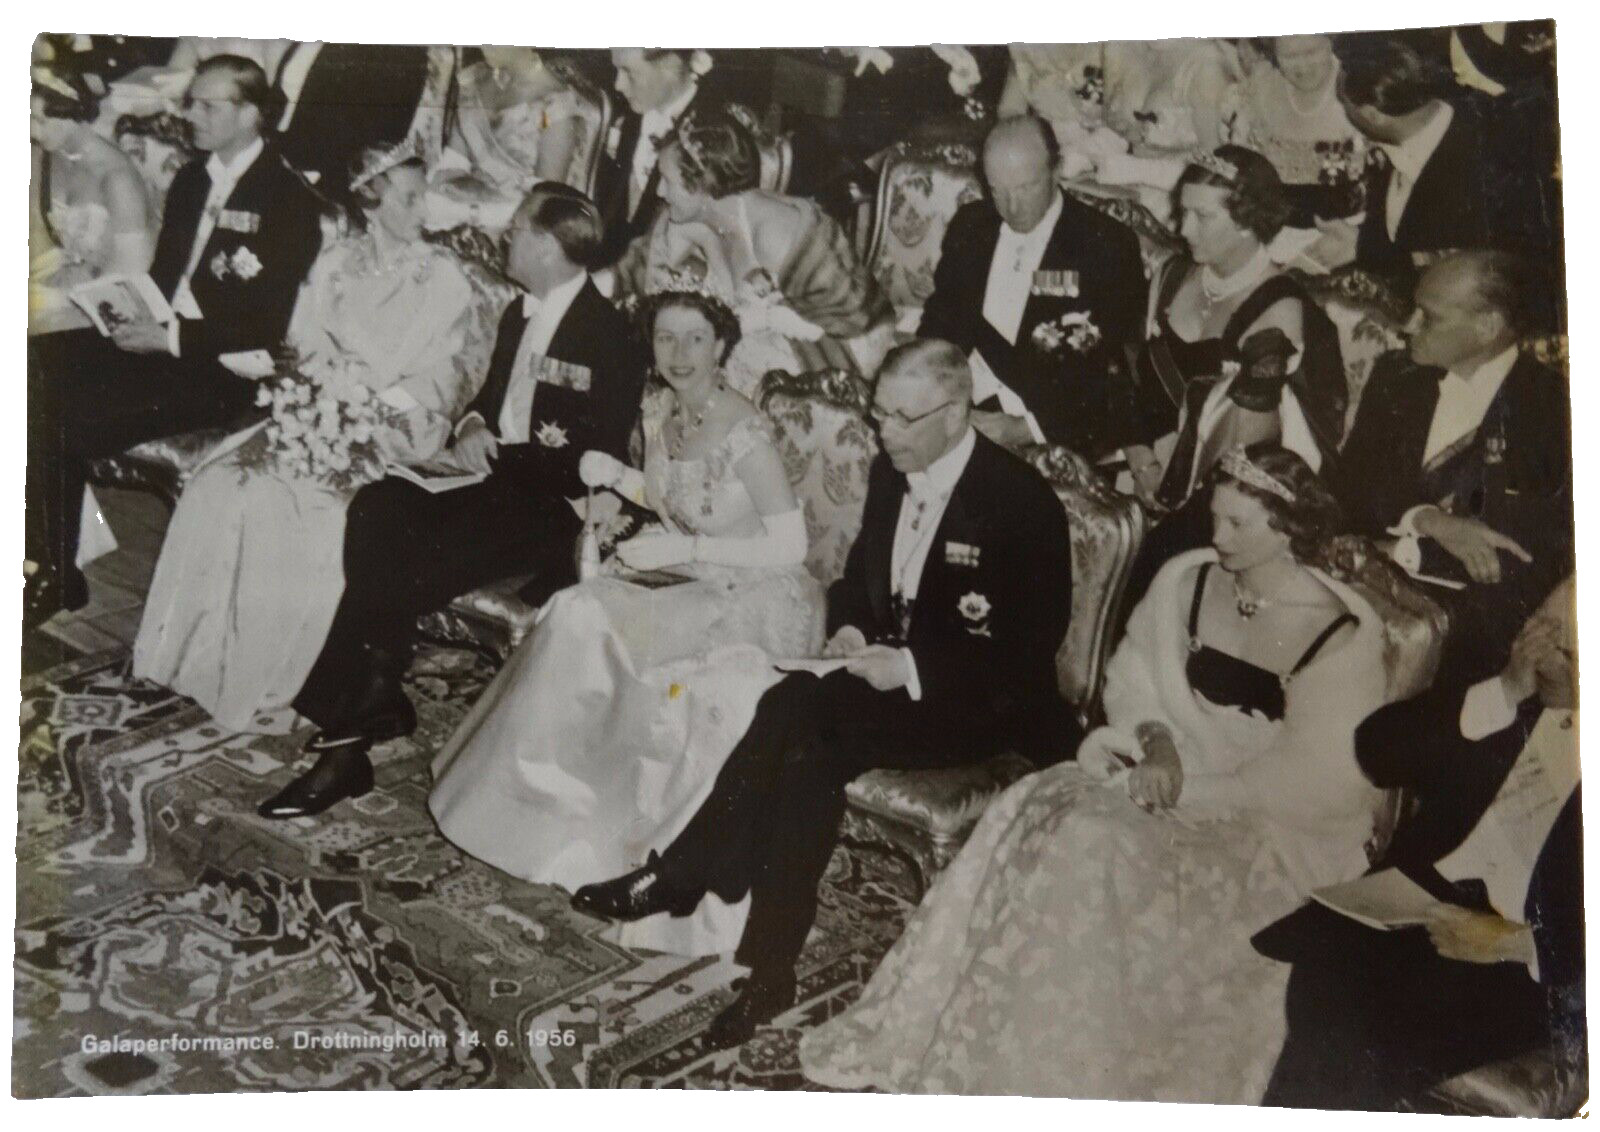 qUEEN ELIZABETH KING GUSTAF GALA PERFORMANCE DROTTNINGHOLM PALACE 1956 neocurio 